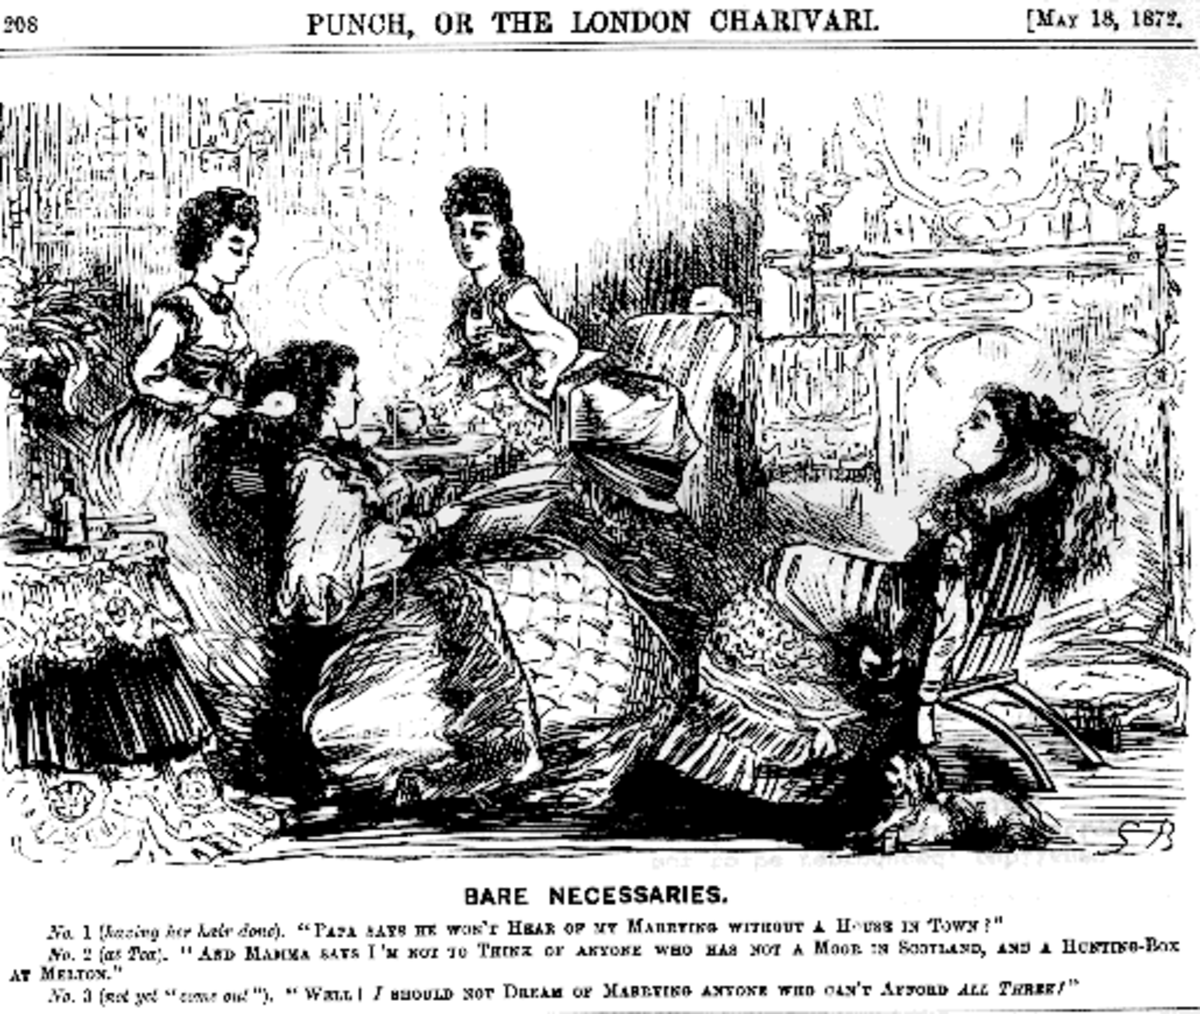 A Punch cartoon, satirizing a Victorian attitude towards marriage